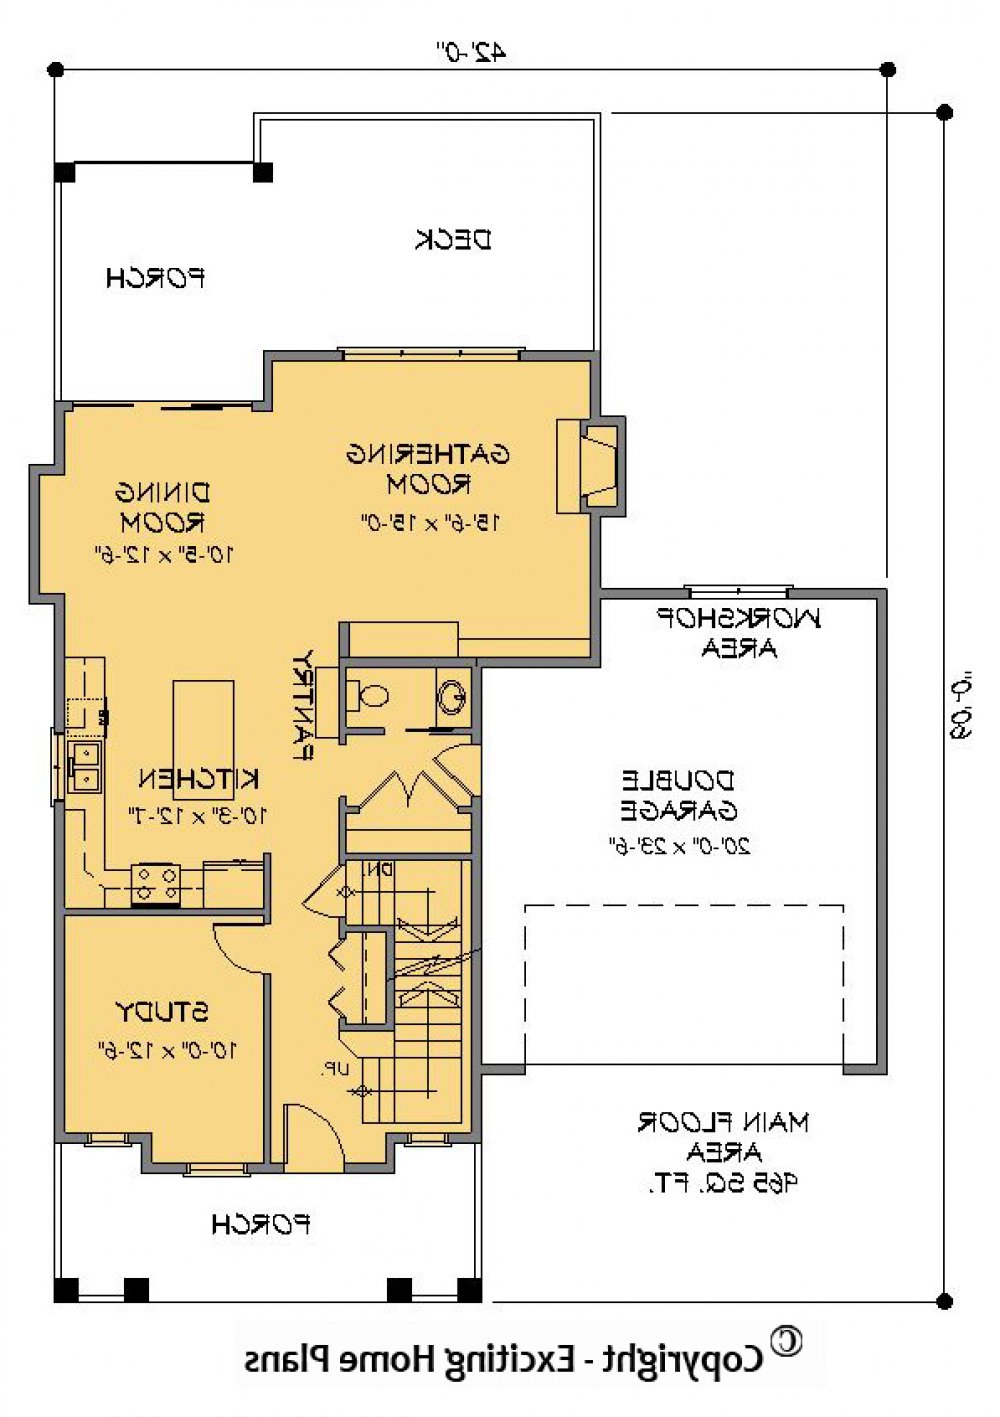 House Plan E1204-10 Main Floor Plan REVERSE